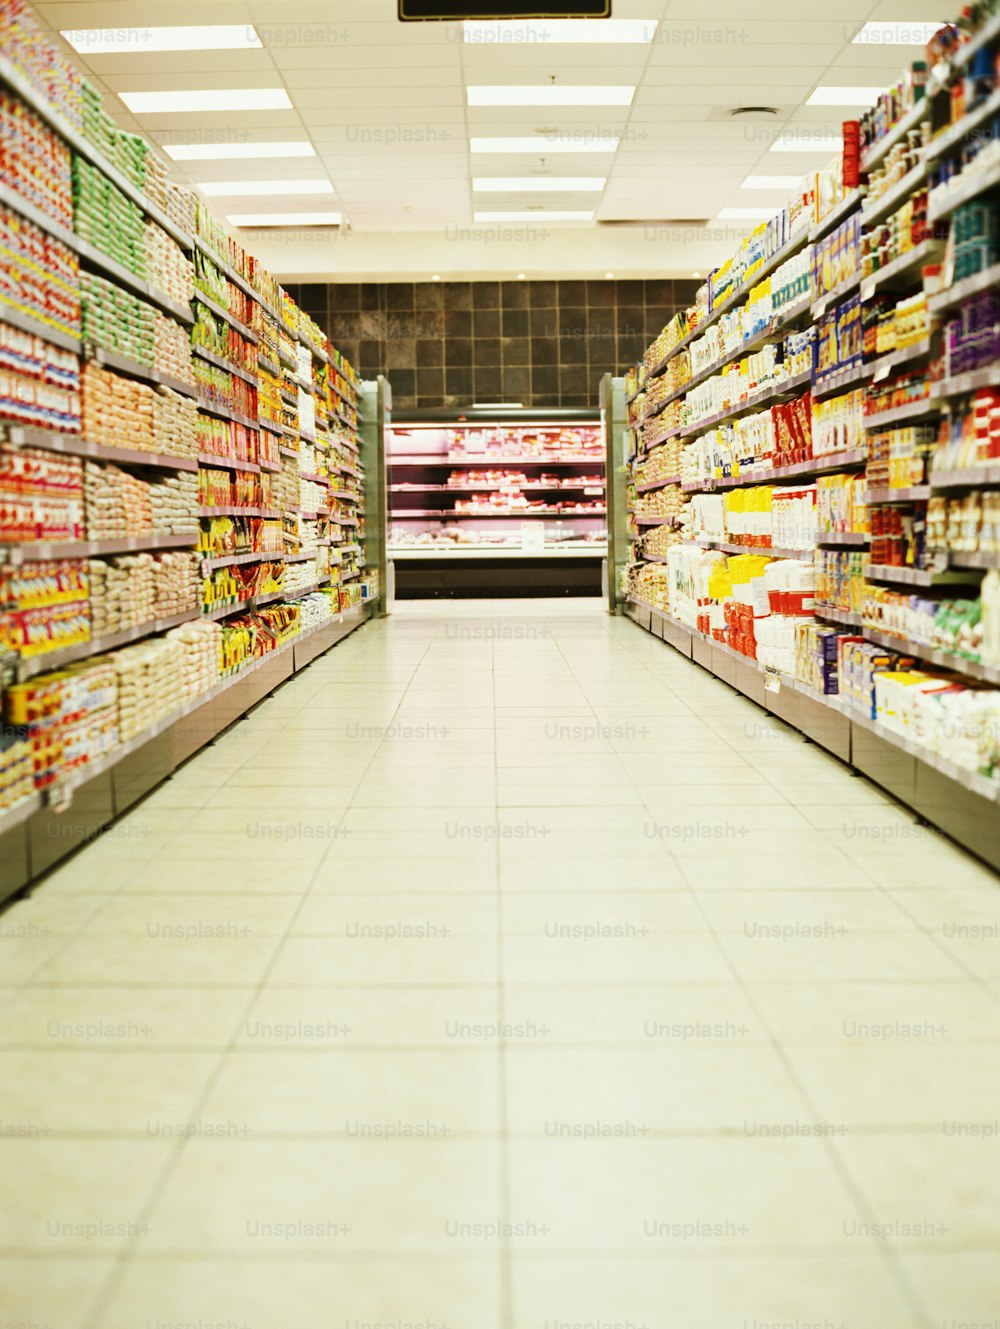 Un pasillo de supermercado lleno de mucha comida